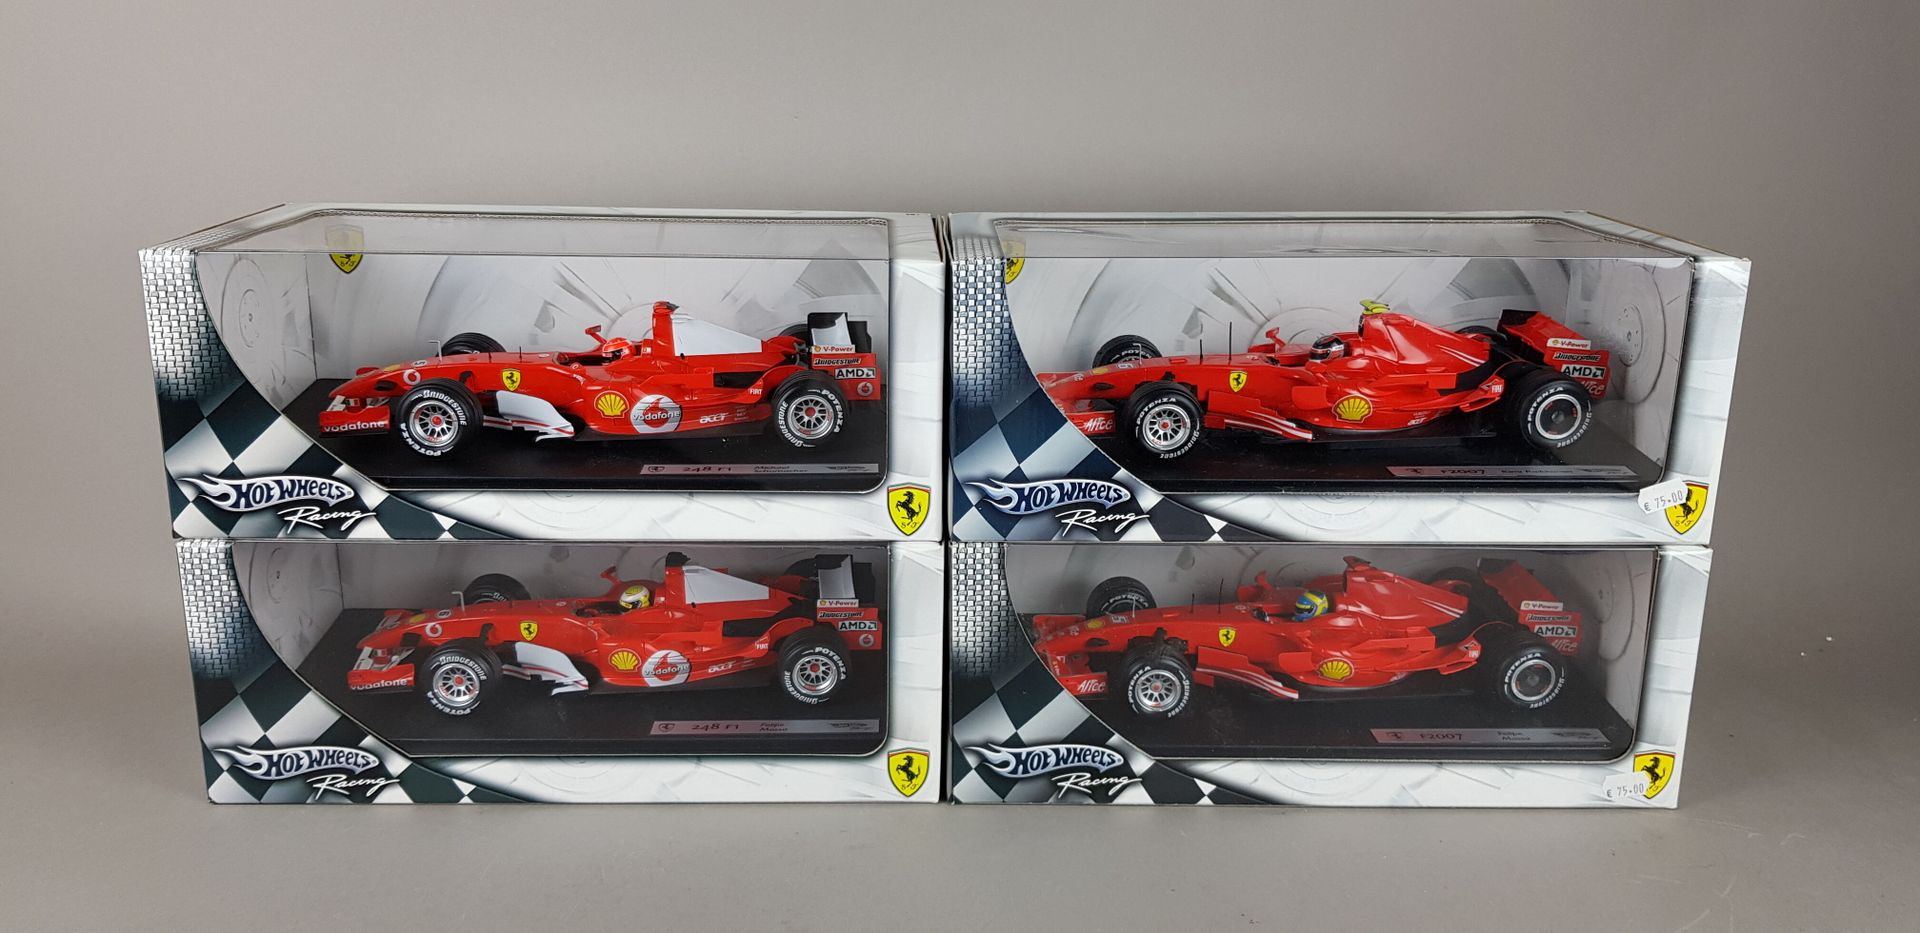 Null HOT WHEELS - FOUR Ferrari 1/18 scale:

1x F2007 Felipe Massa 

1x 248 F1 Mi&hellip;